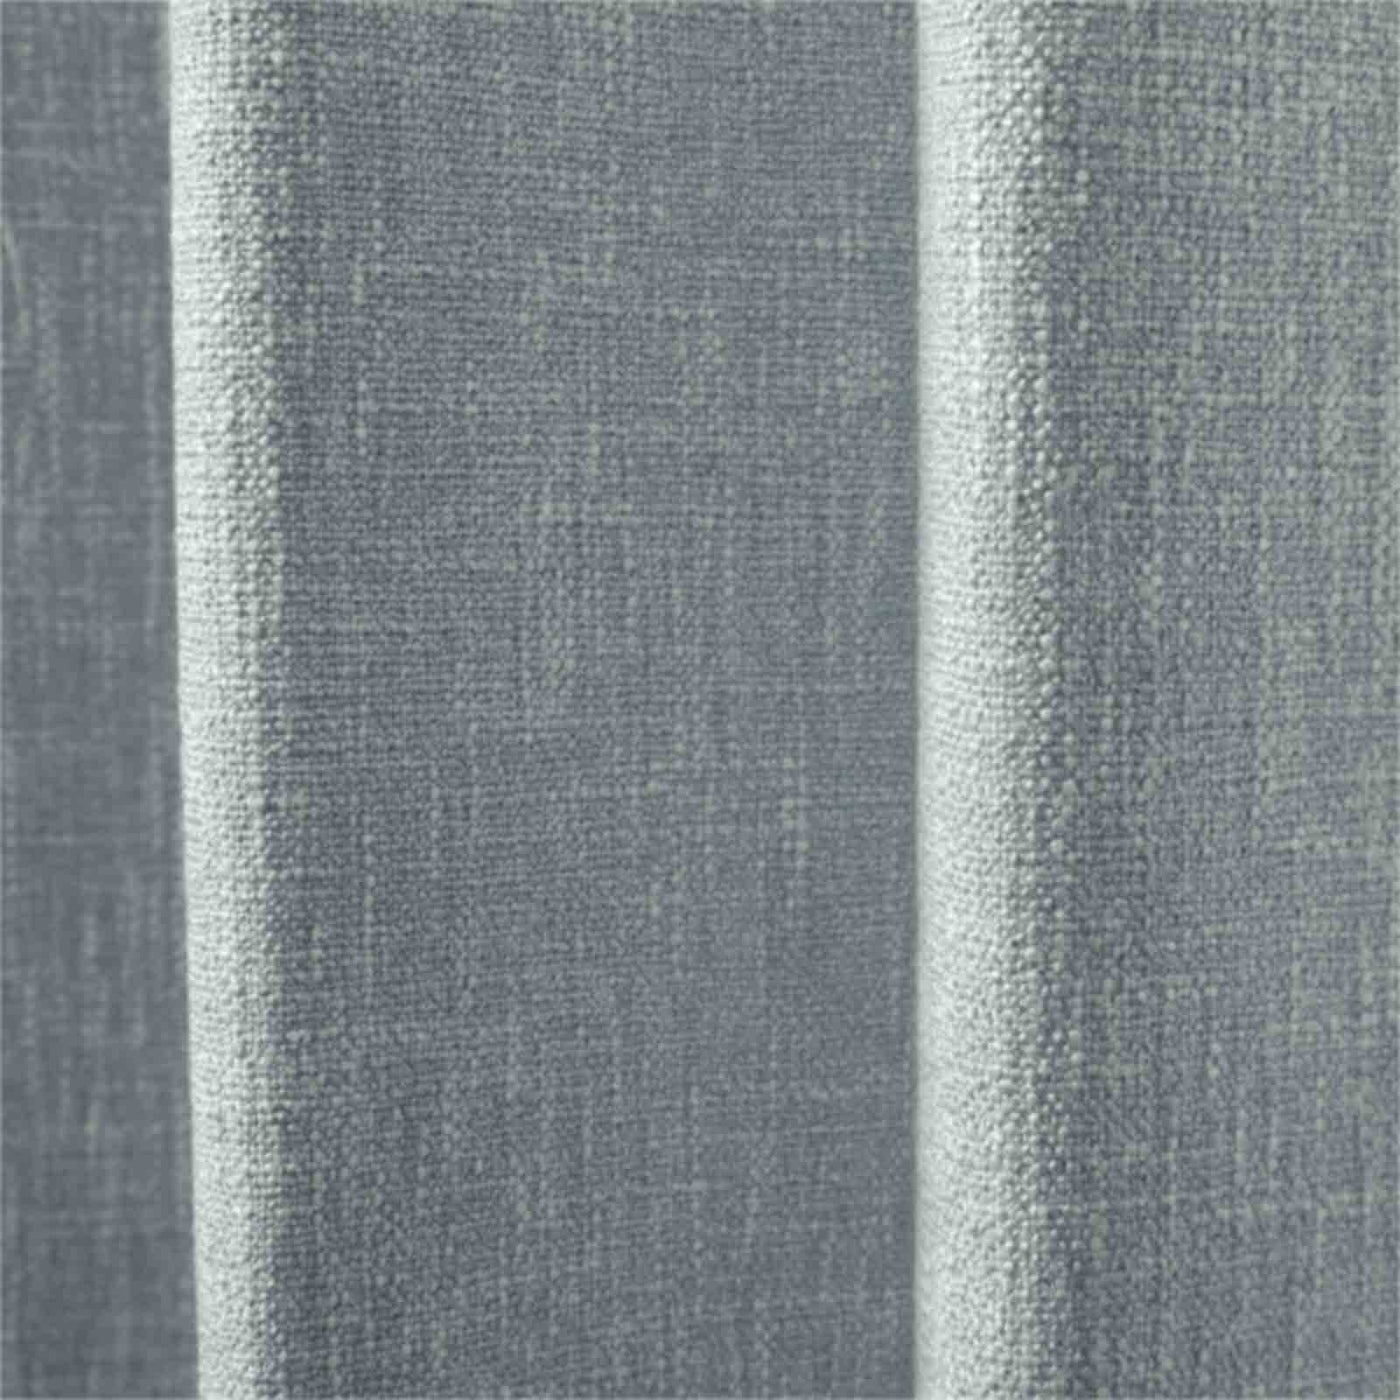 Sarai Textured Metallic Cotton Blend Curtain Soft Top TWOPAGES